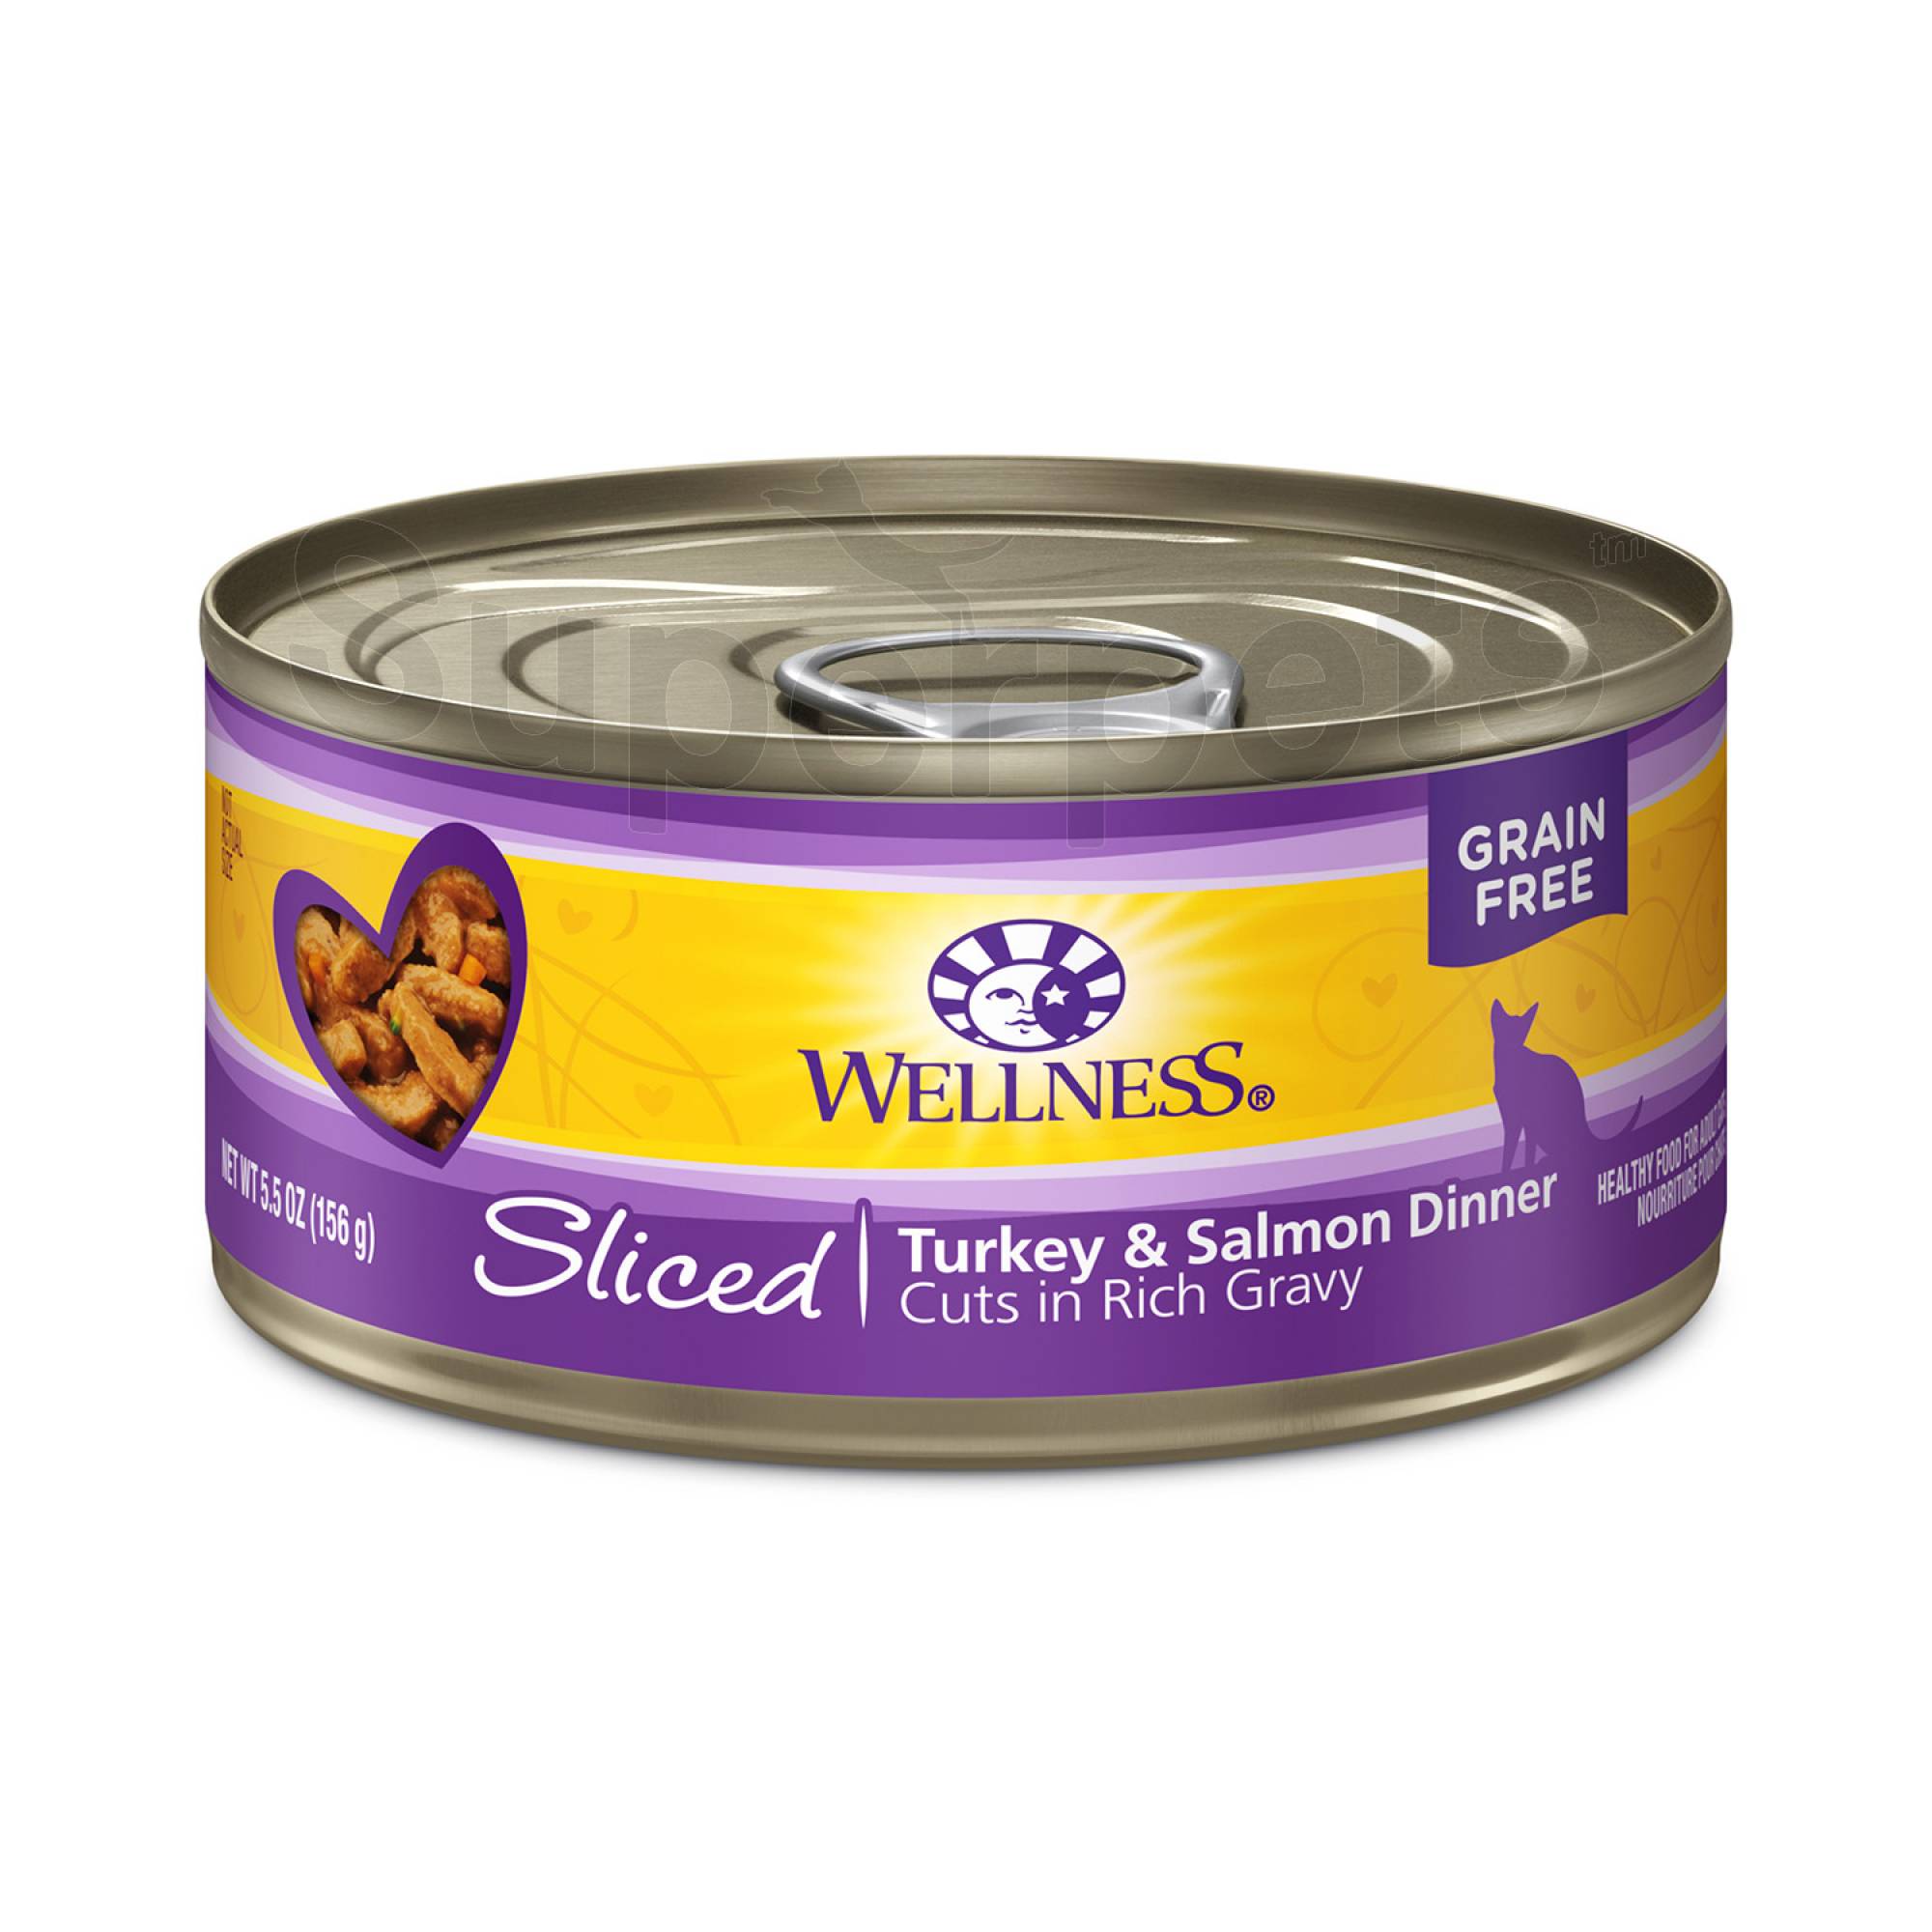 Wellness - Cat Complete Health Grain-Free 156g Sliced Turkey & Salmon Dinner Cuts in Rich Gravy